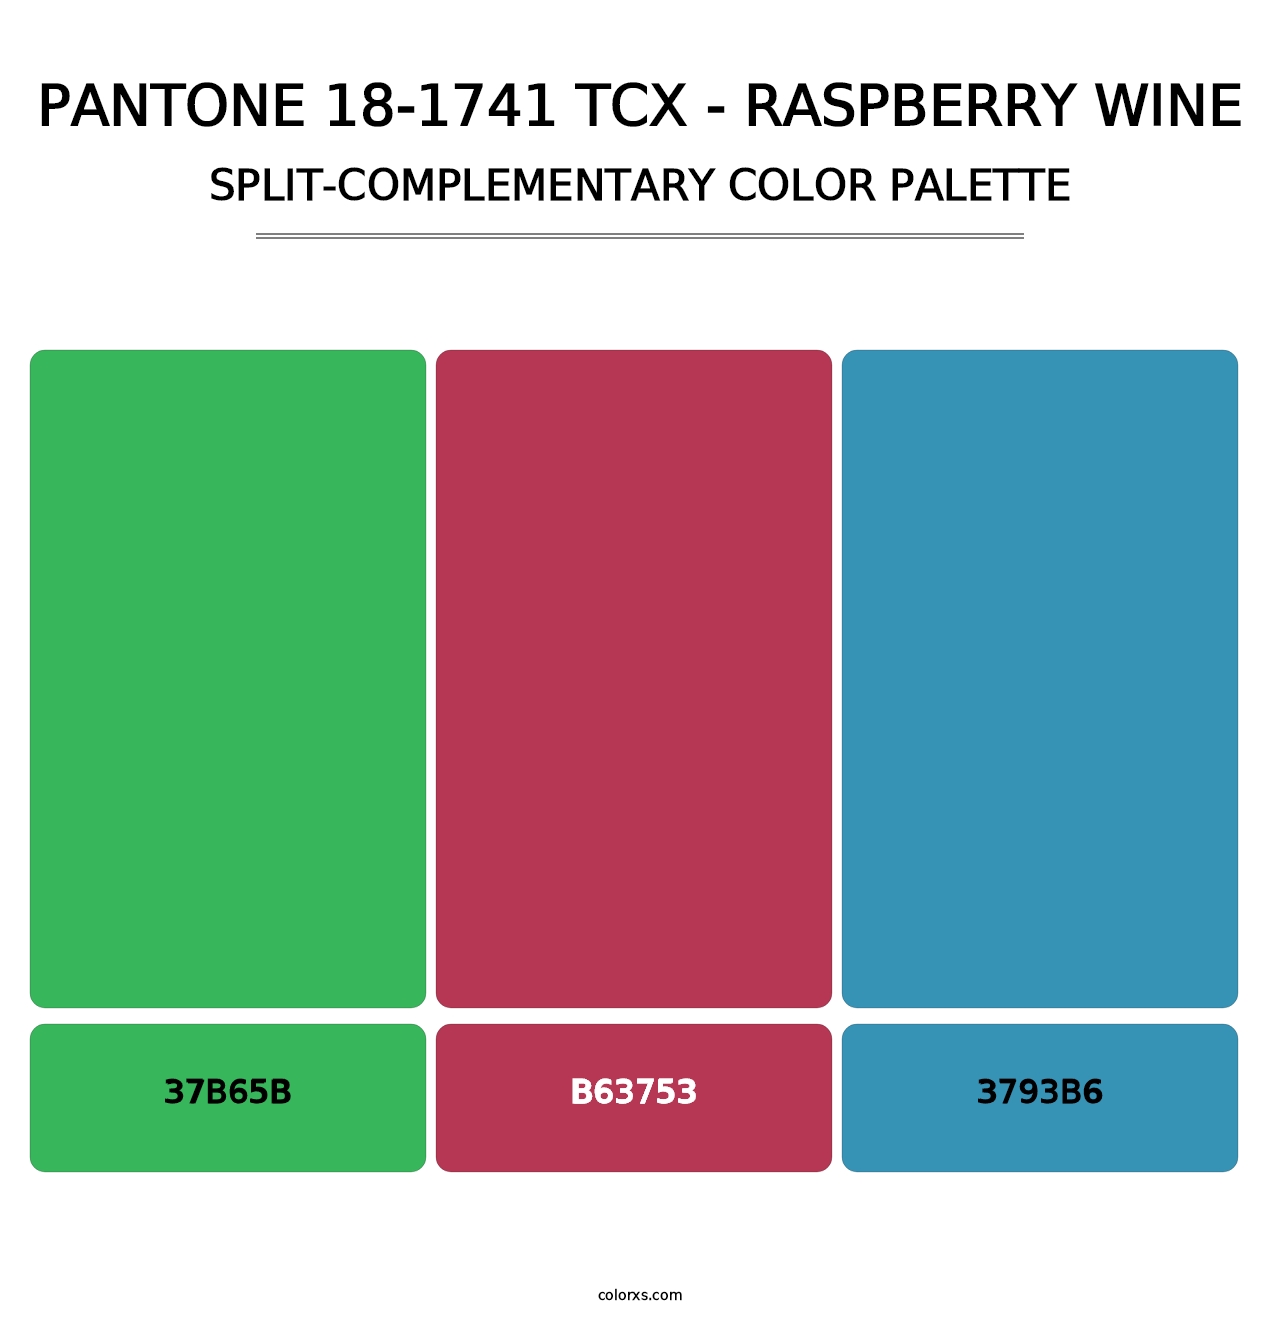 PANTONE 18-1741 TCX - Raspberry Wine - Split-Complementary Color Palette